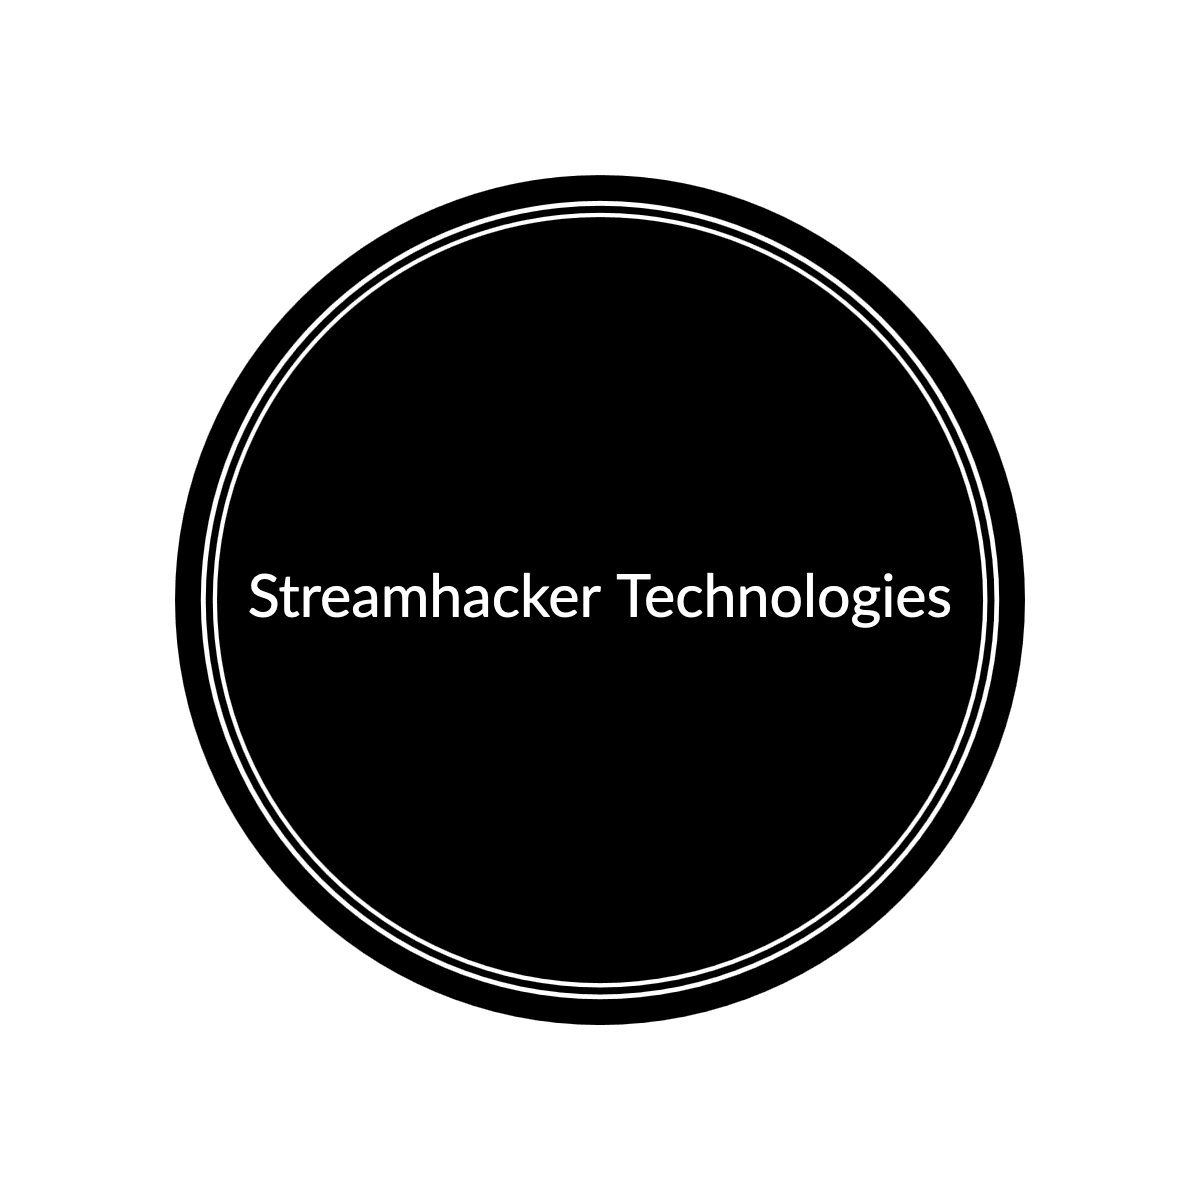 Streamhacker Technologies